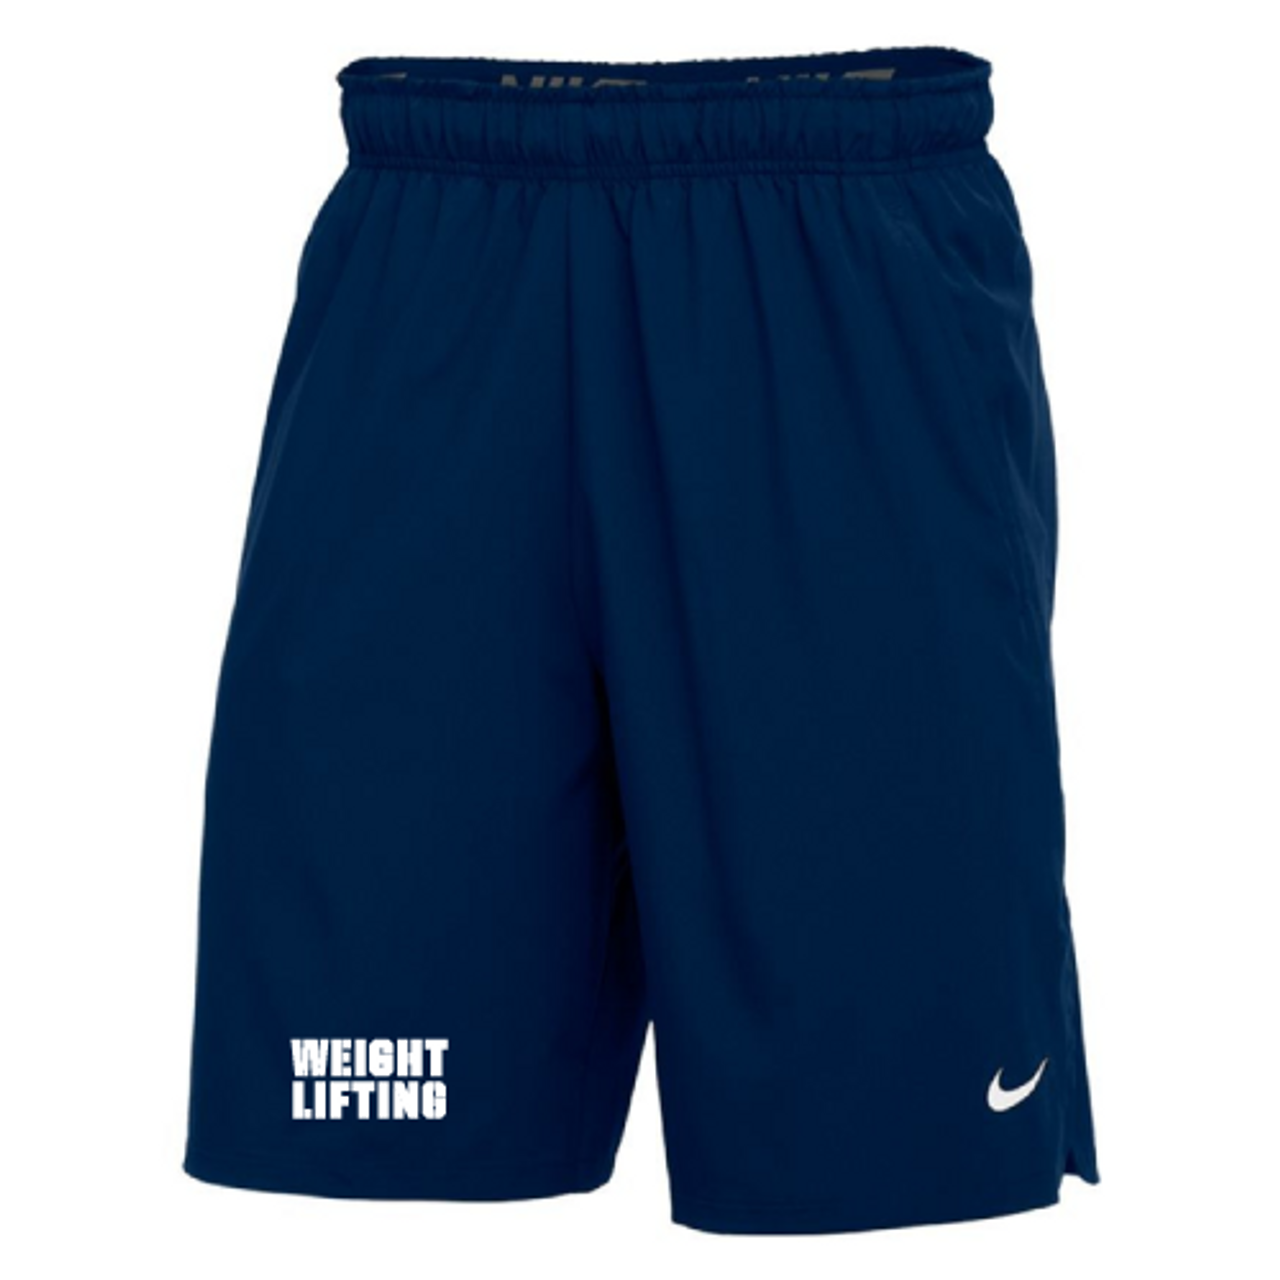 Nike Men's Weightlifting Flex Woven Training Short W/Pockets - Navy/White